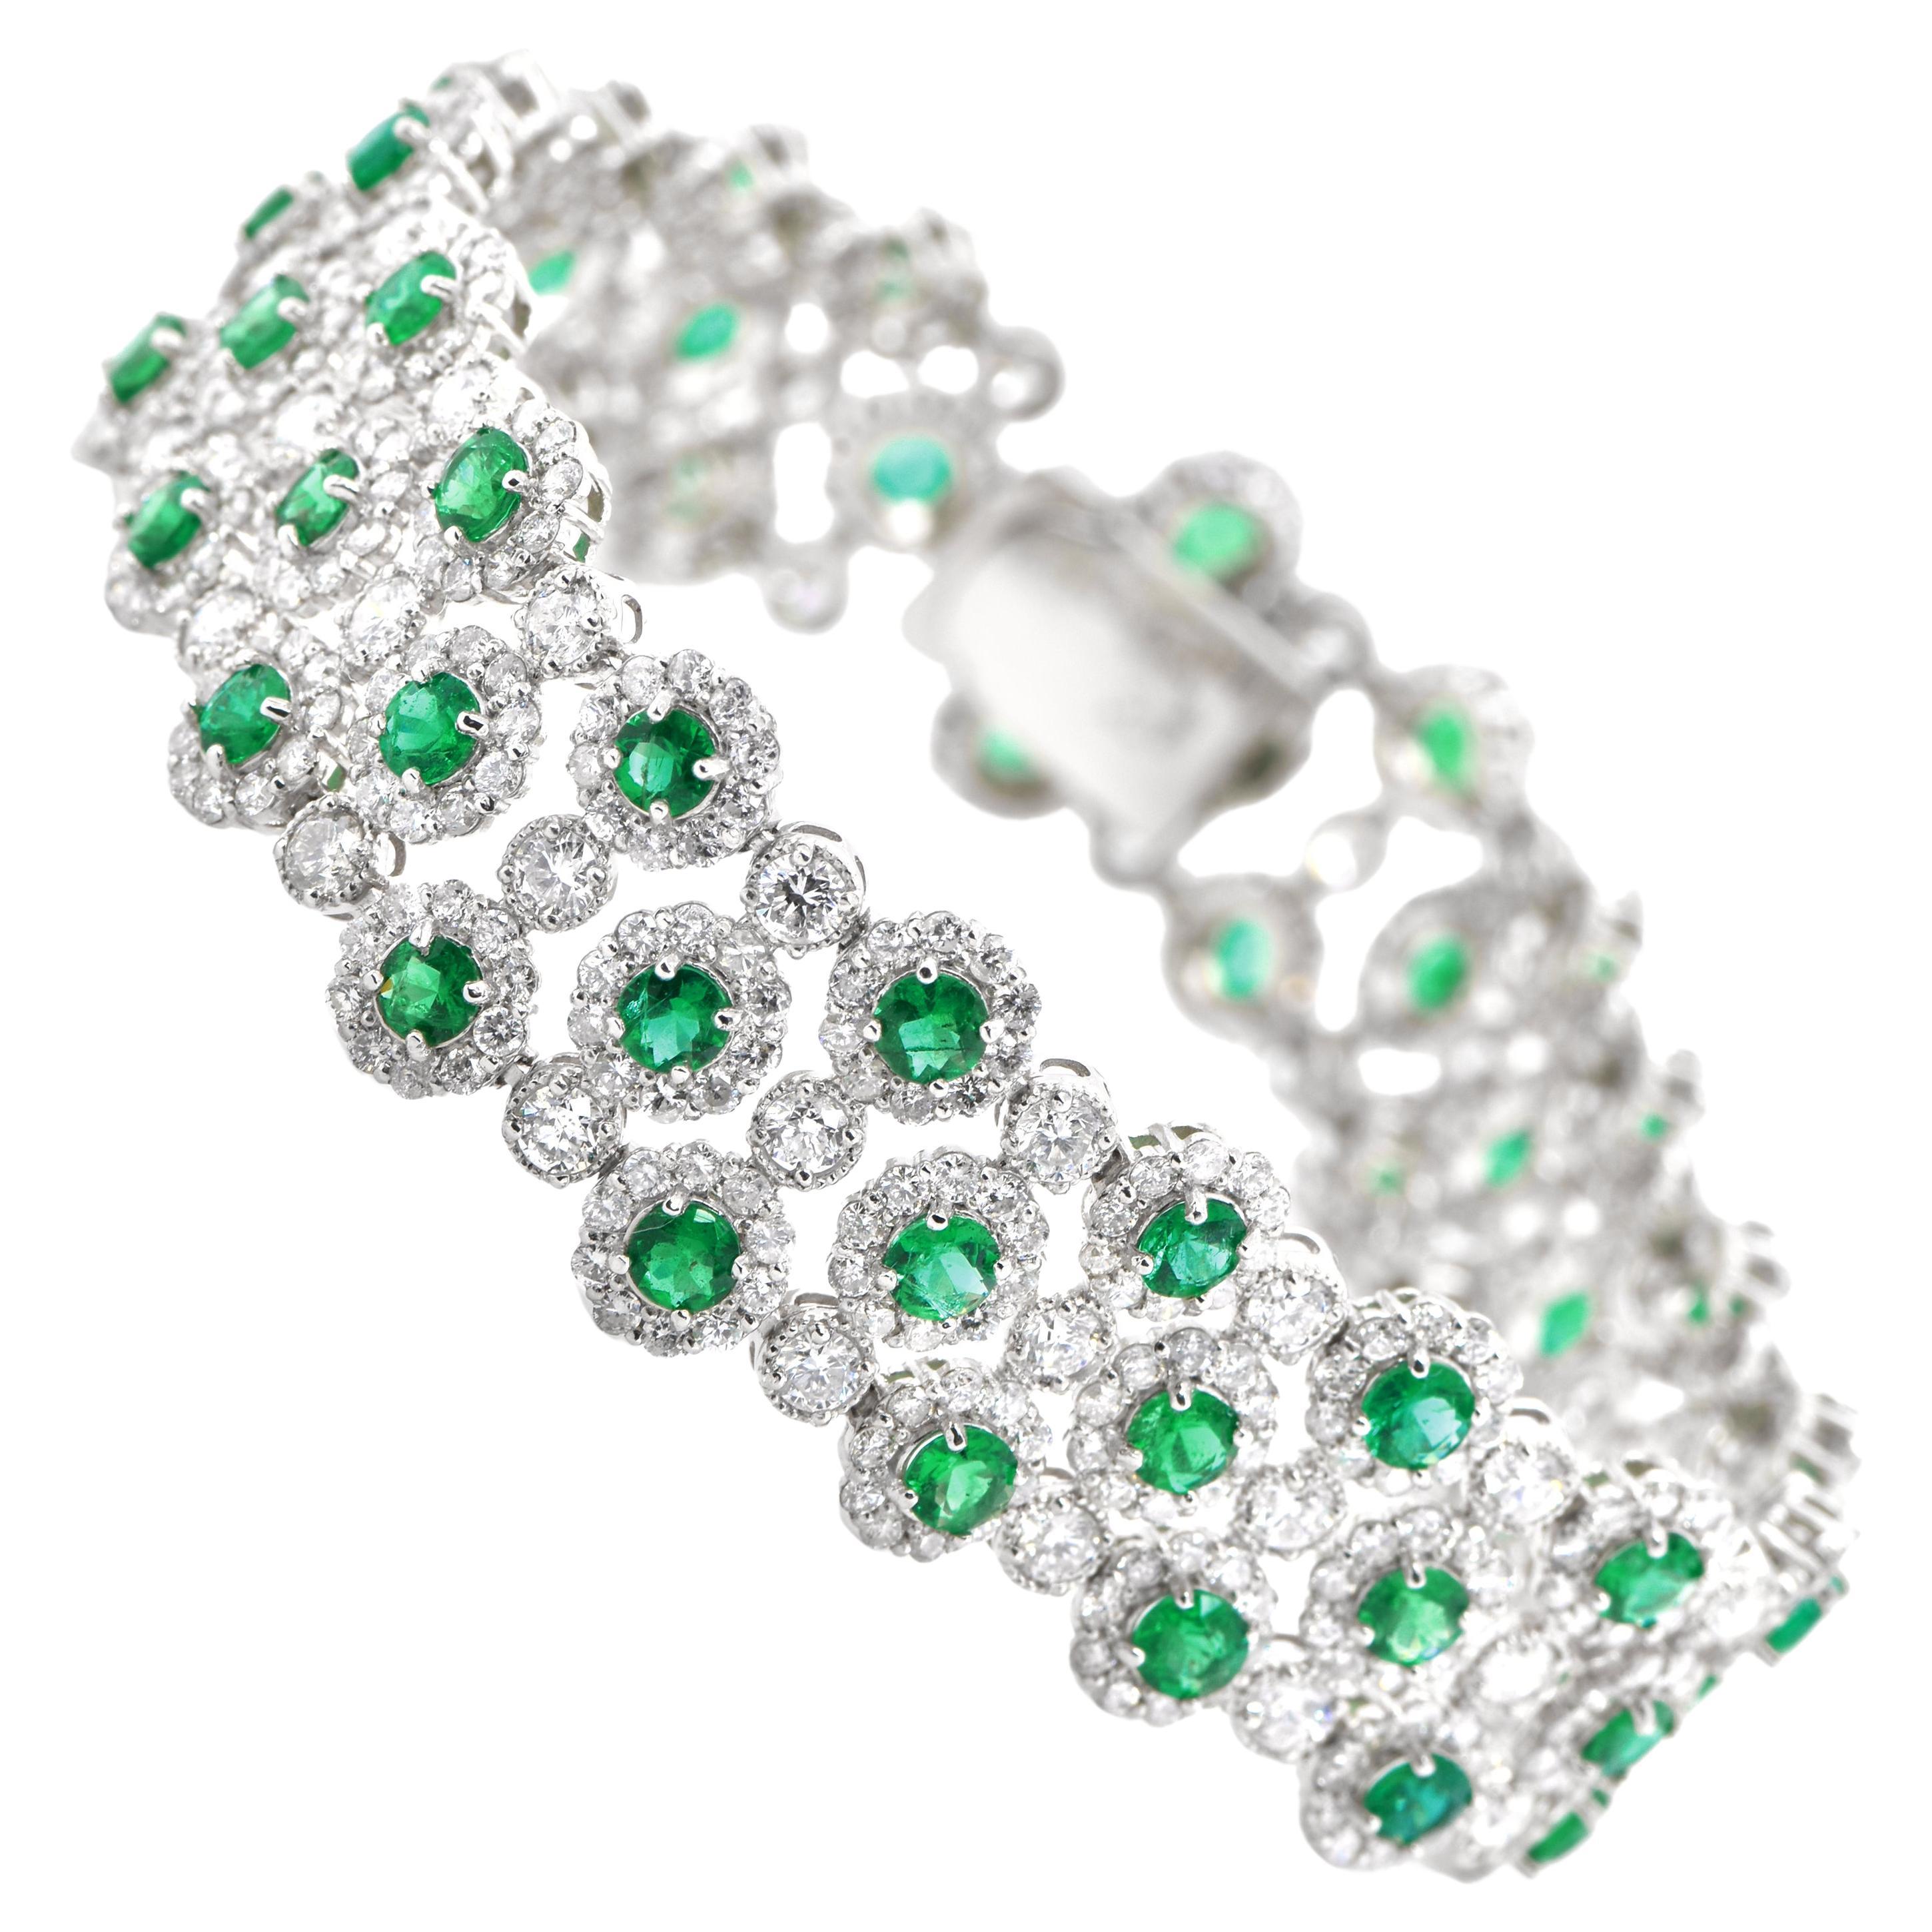 5.19 Carat Natural Round Cut Emeralds and Diamonds Bracelet Set in Platinum